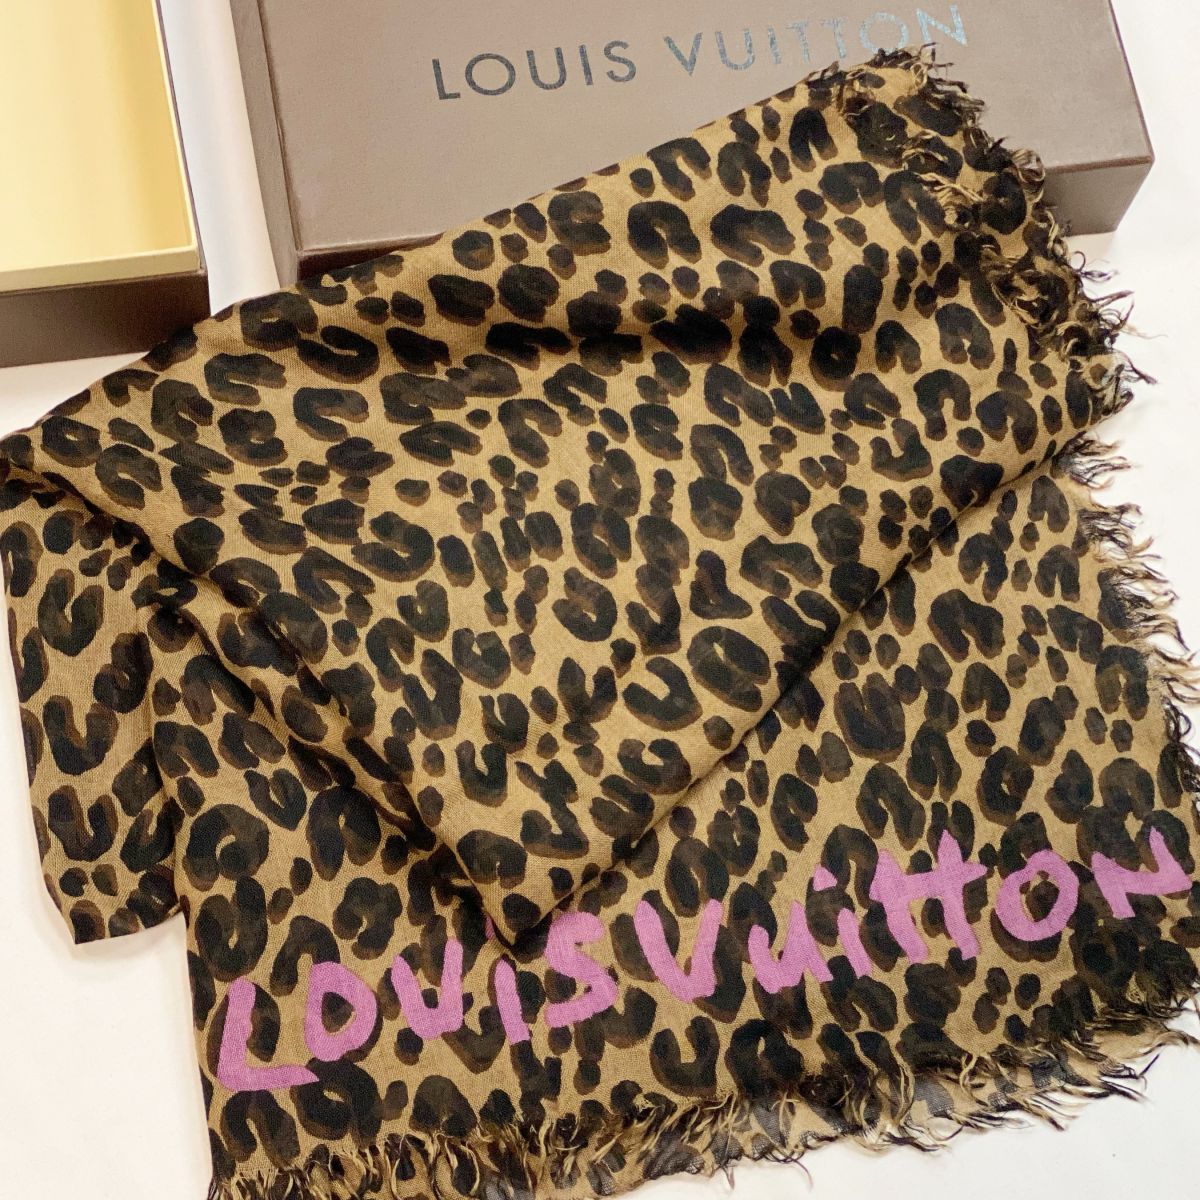 Палантин Louis Vuitton размер 130/180 цена 12 308 руб 